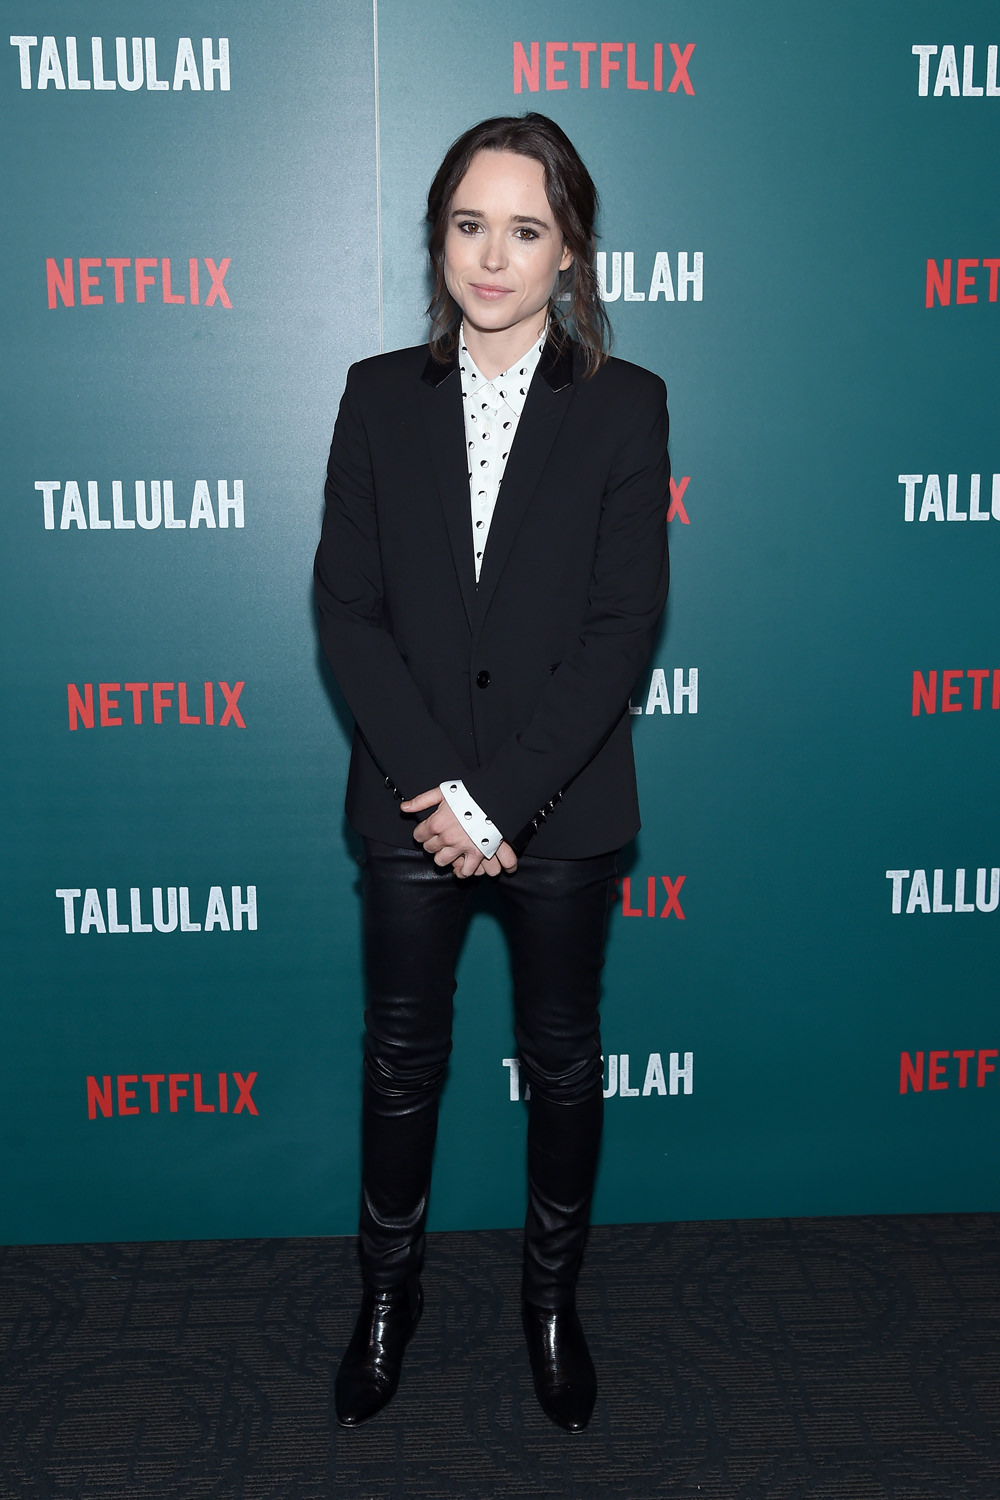 Ellen-Page-Tallulah-New-York-Special-Screening-Red-Carpet-Fashion-Tom-Lorenzo-Site (1)